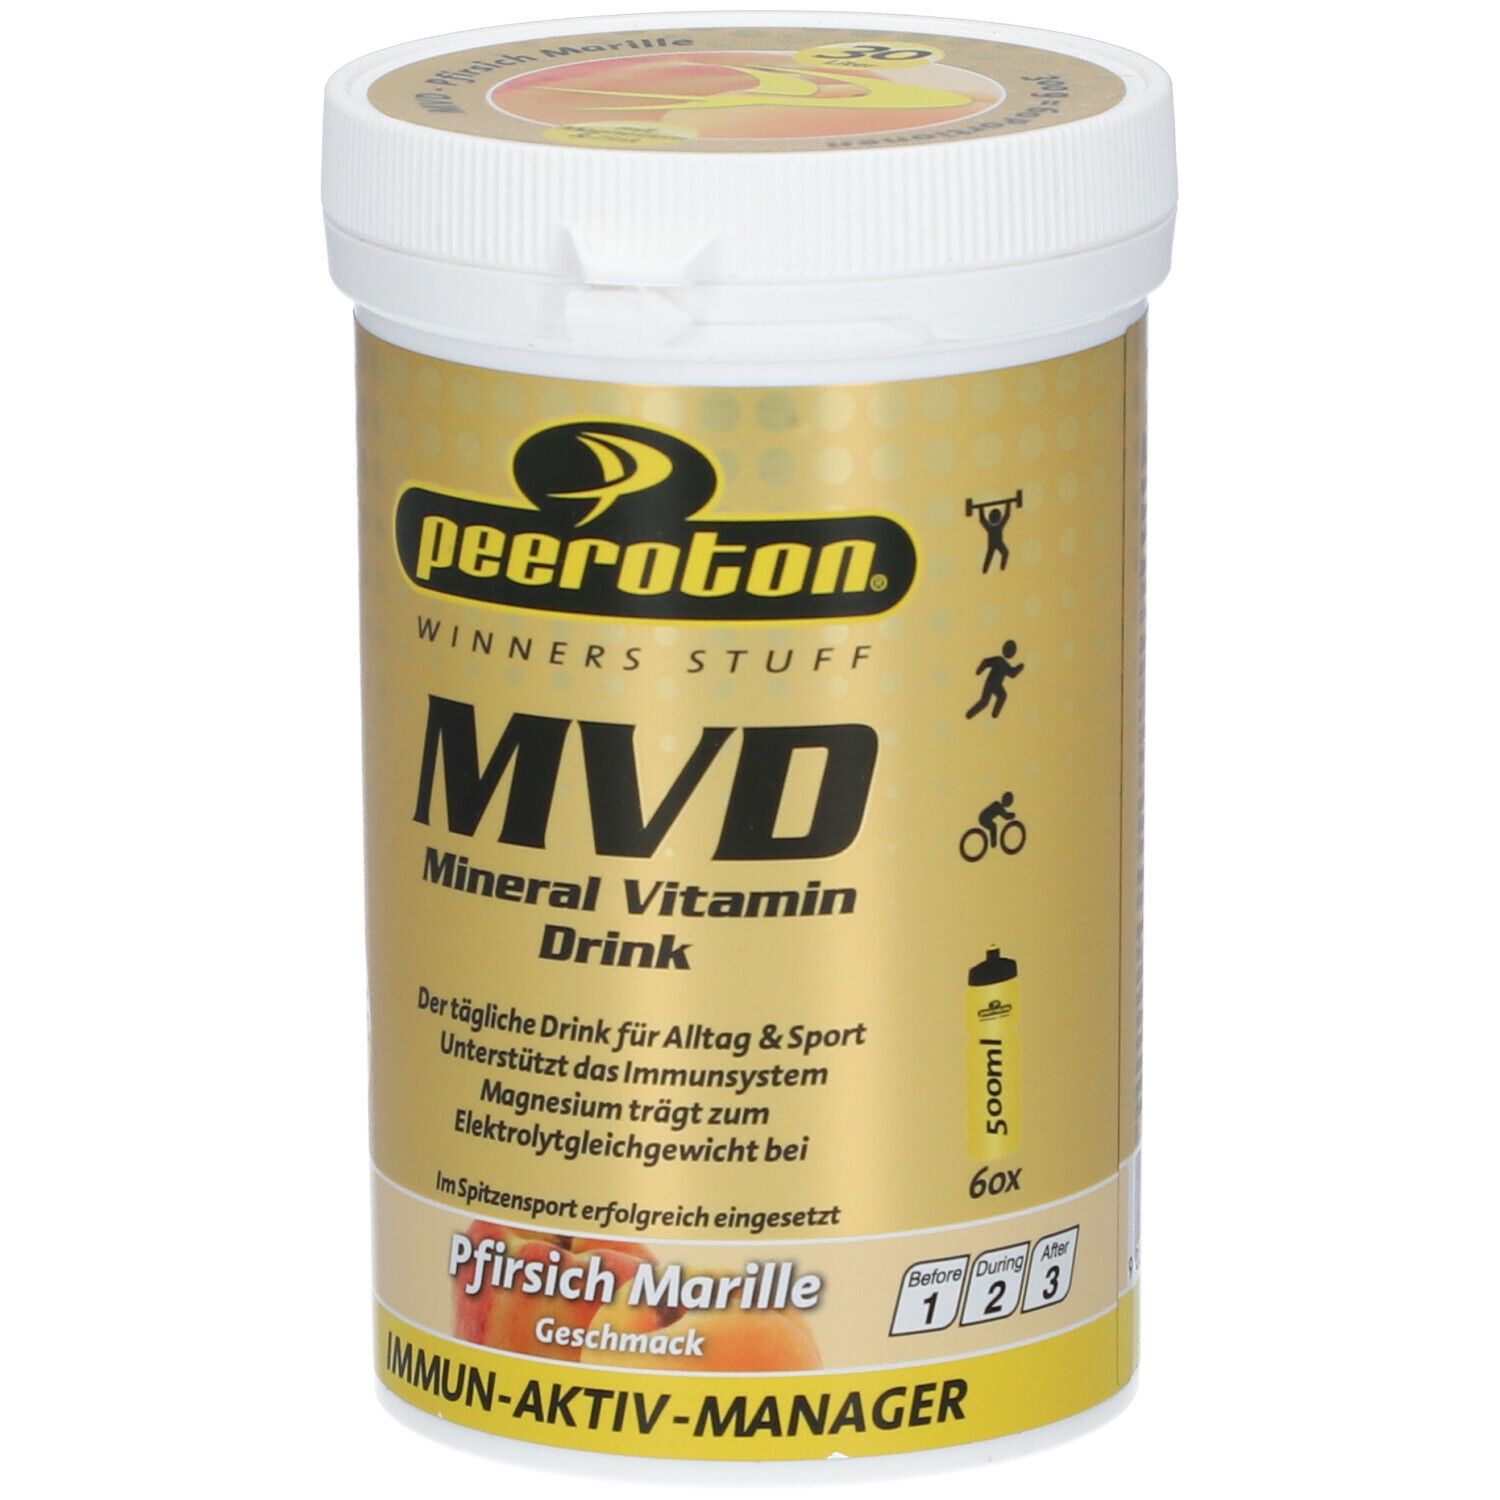 peeroton® MVD Minderal Vitamin Drink Pfirsich Marille